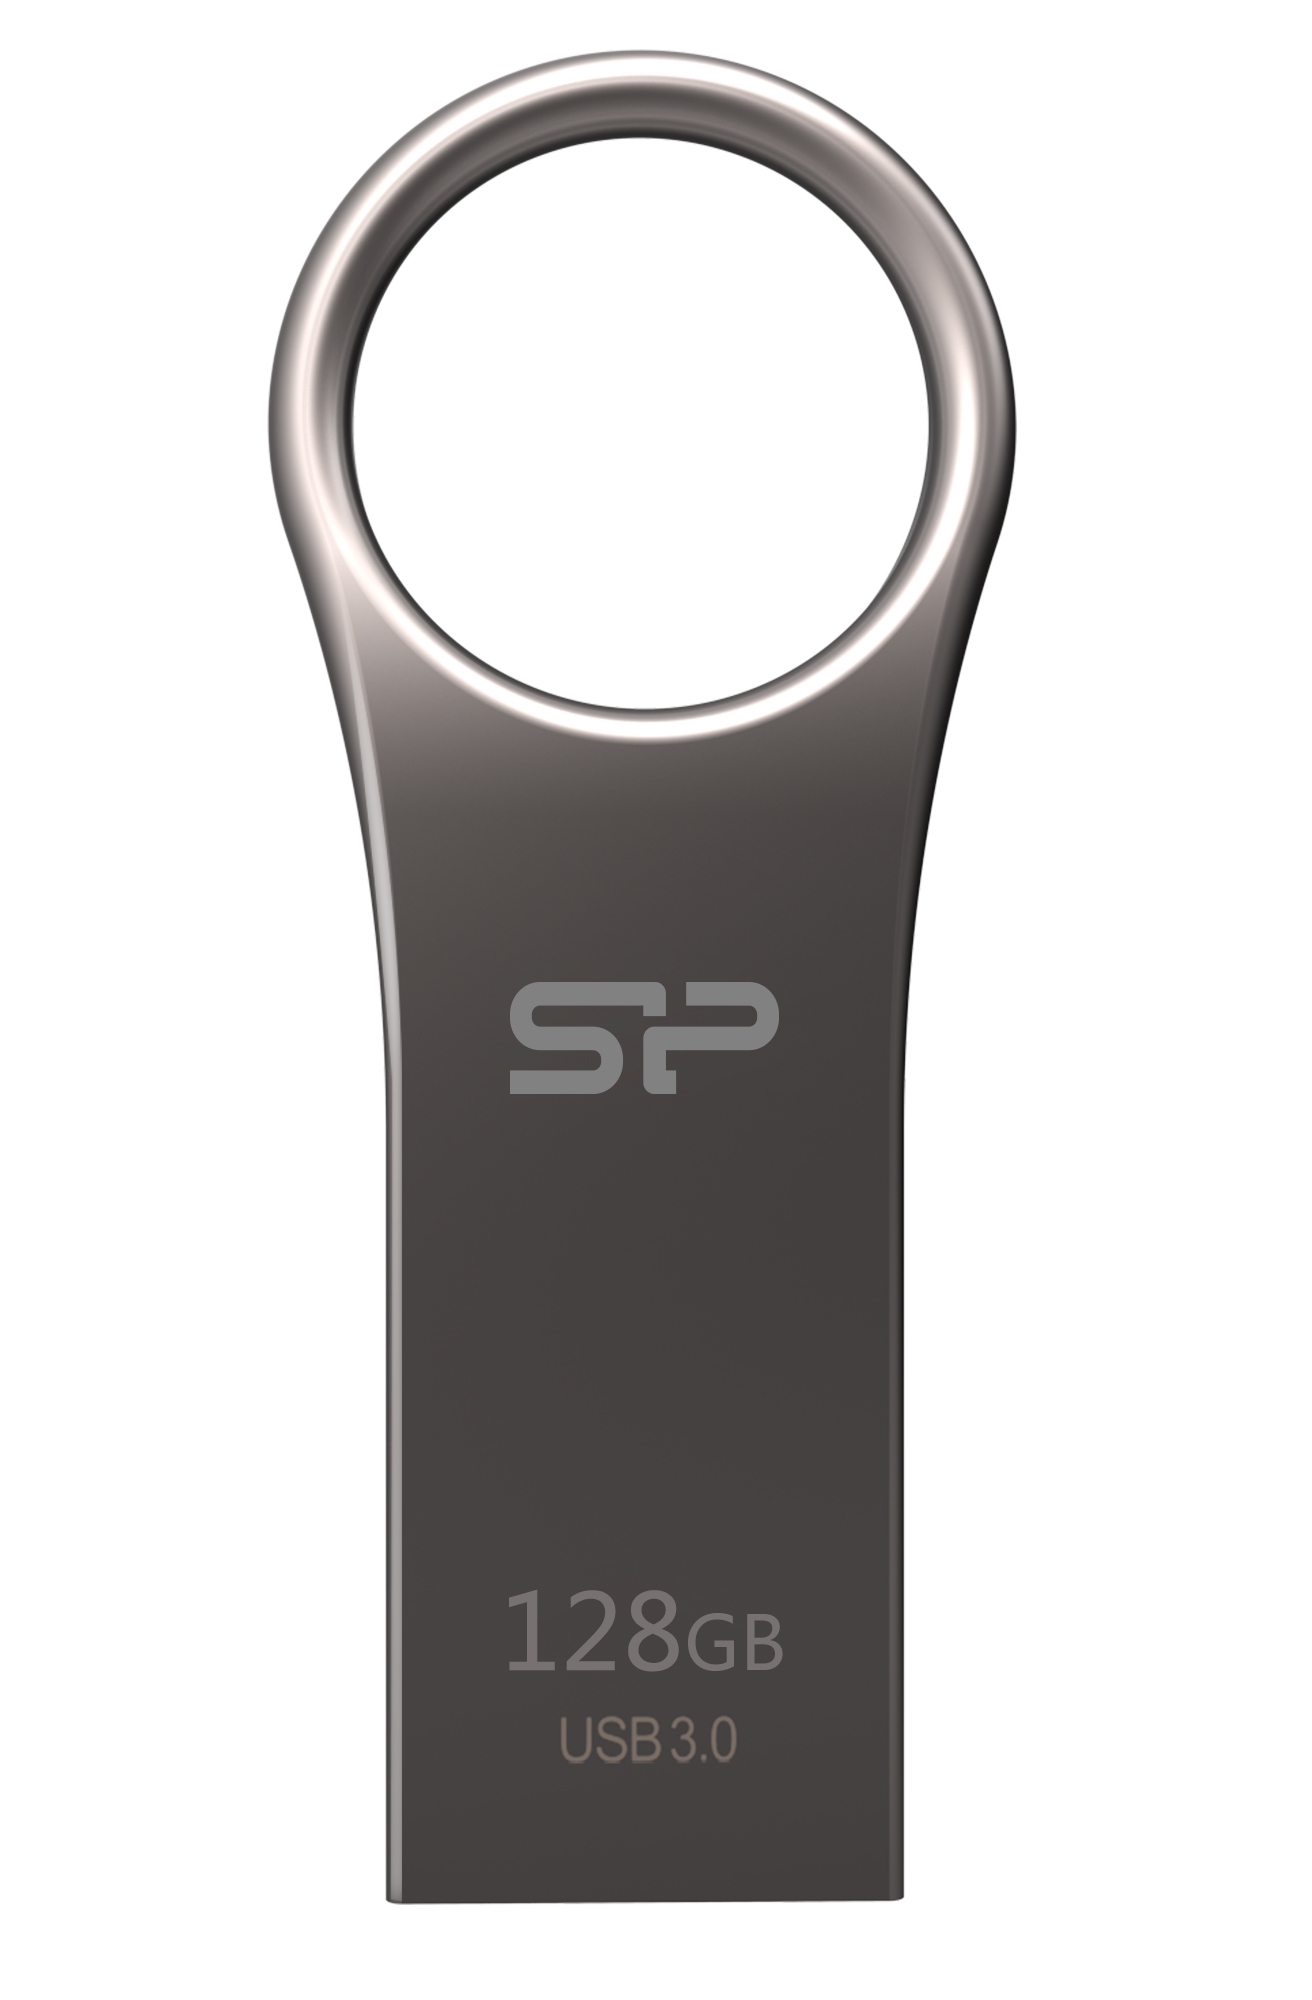 SILICON POWER Jewel J80 - USB flash drive - 128 GB - USB 3.0 - silver, titanium - image 2 of 5